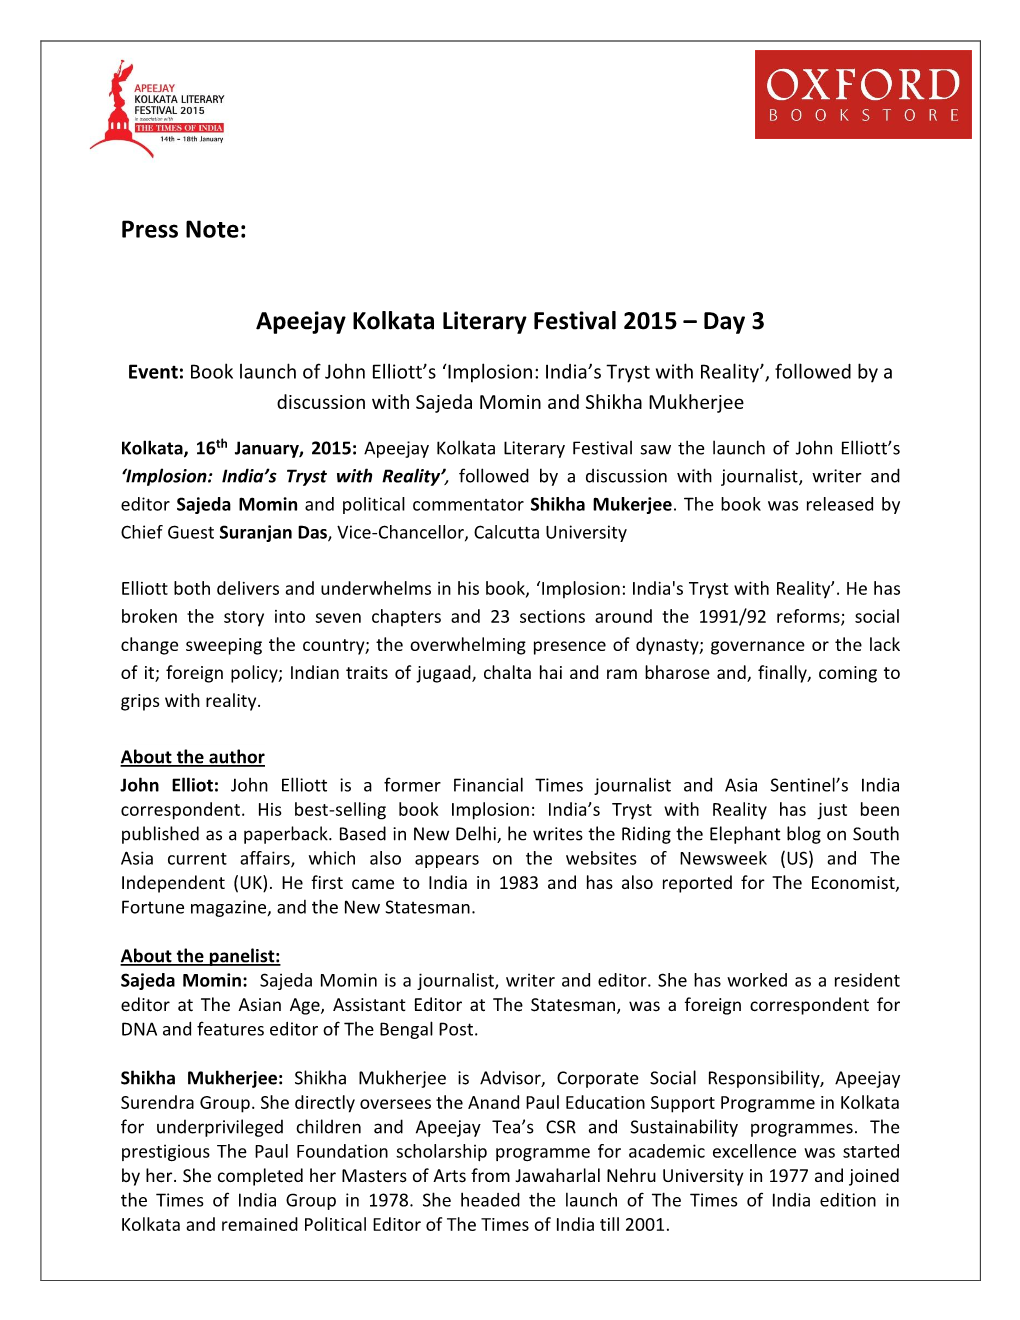 Press Note: Apeejay Kolkata Literary Festival 2015 – Day 3